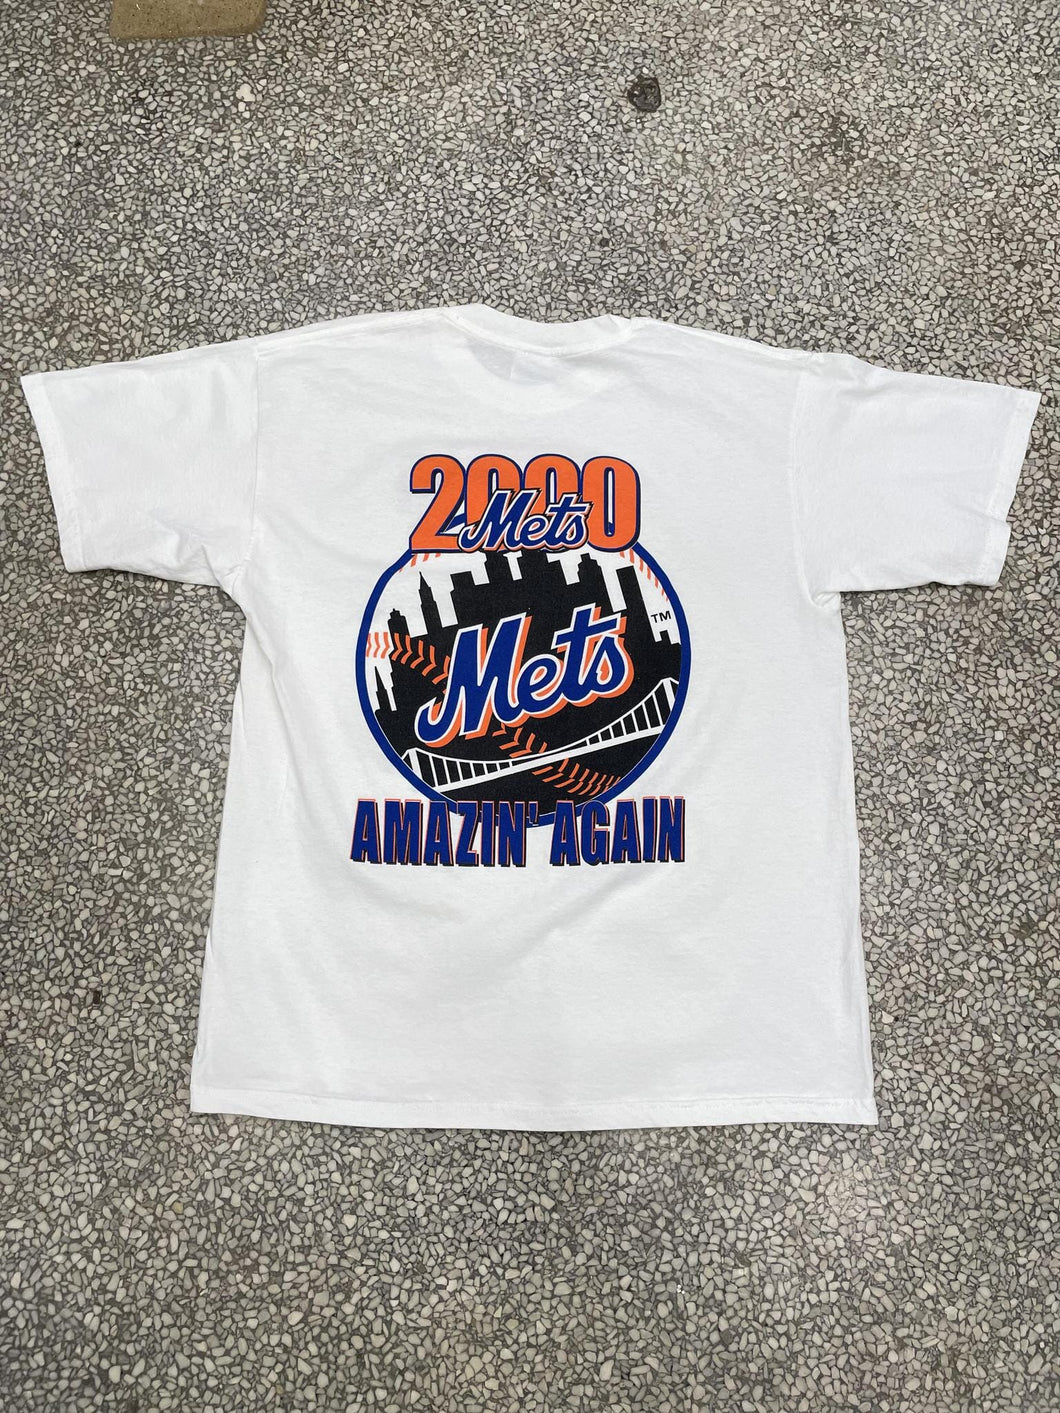 New York Mets Vintage 2000 Amazin' Again ABC Vintage 